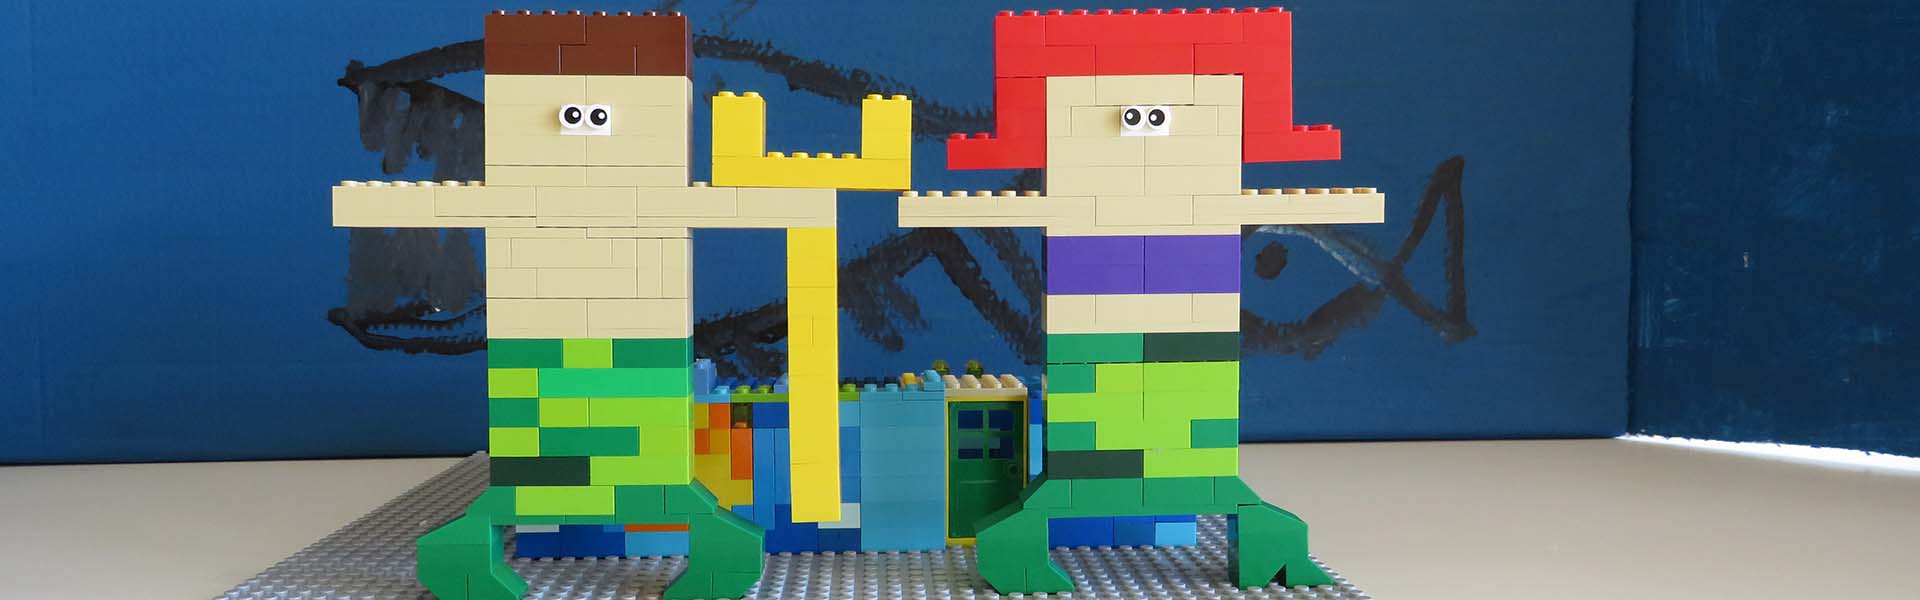 Legomateslegoworkbanner